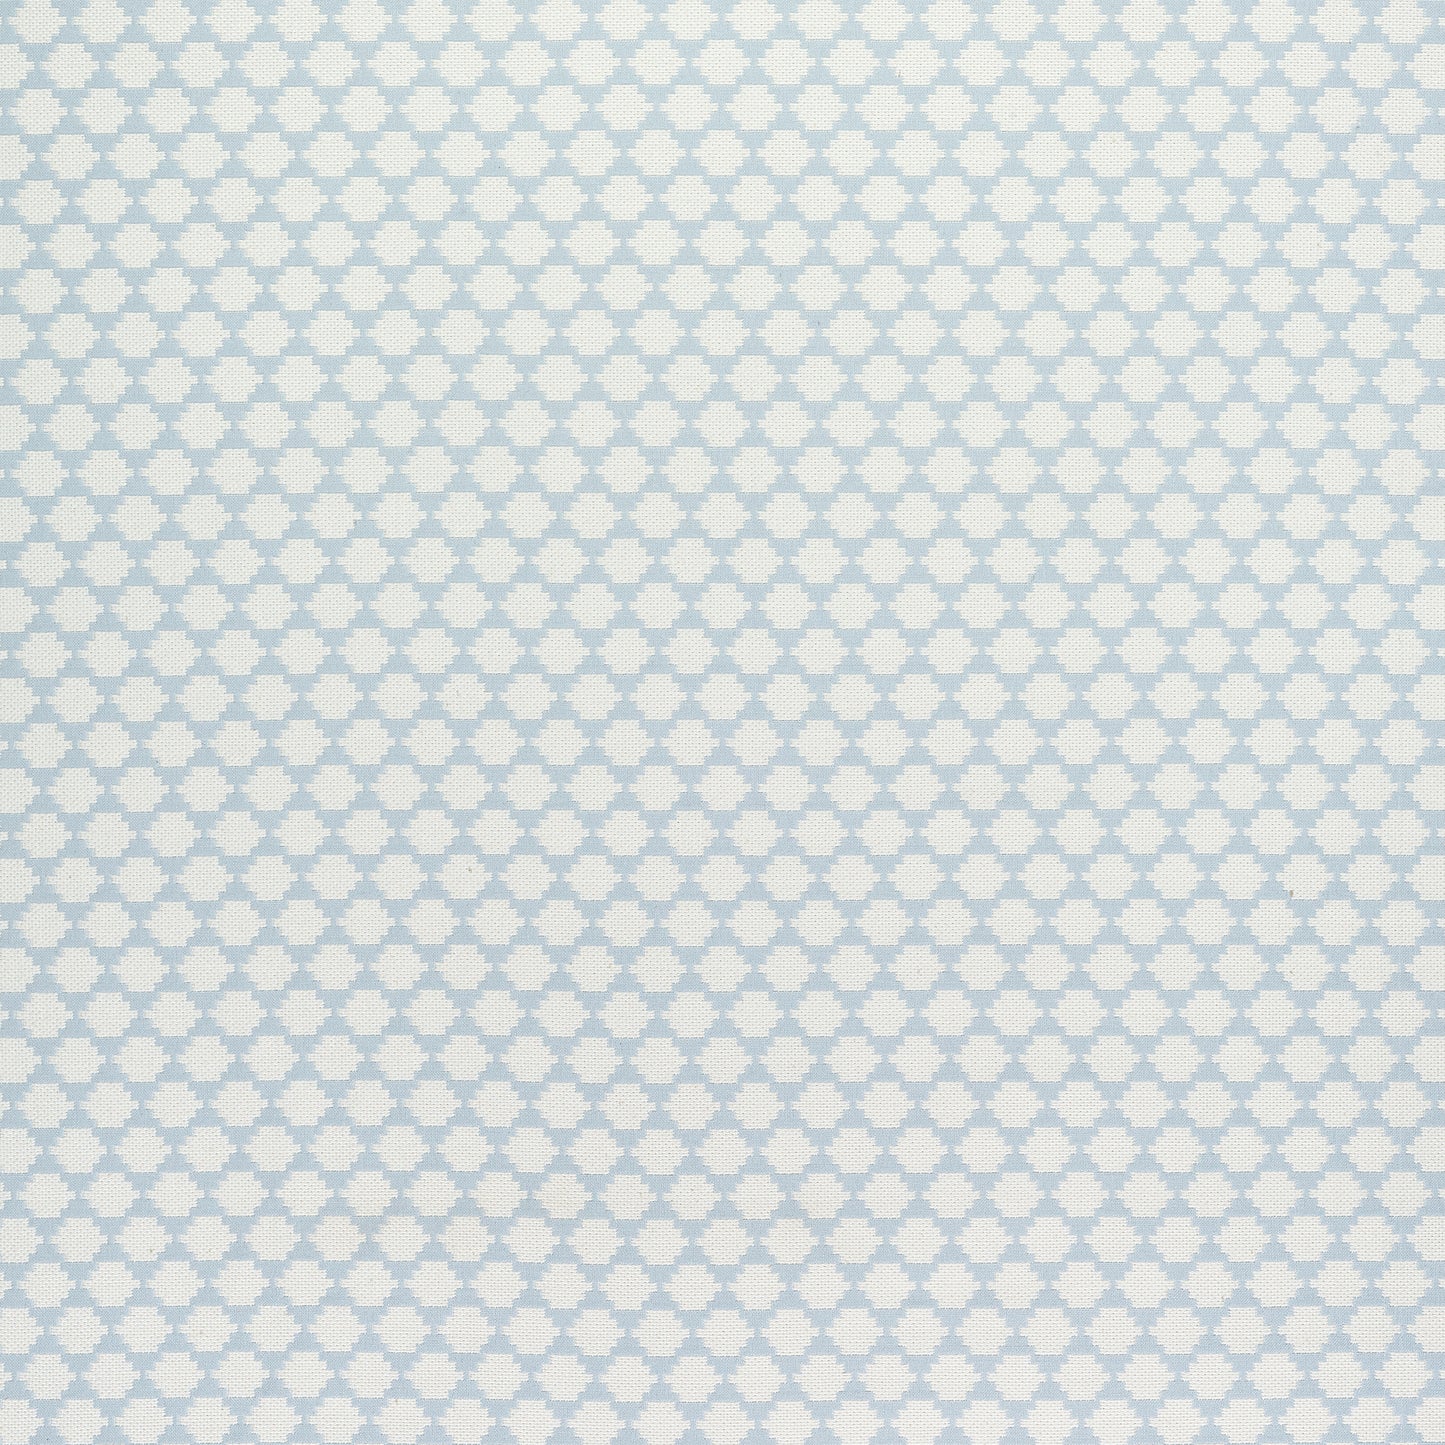 Purchase Thibaut Fabric SKU W775450 pattern name Bijou color Light Blue